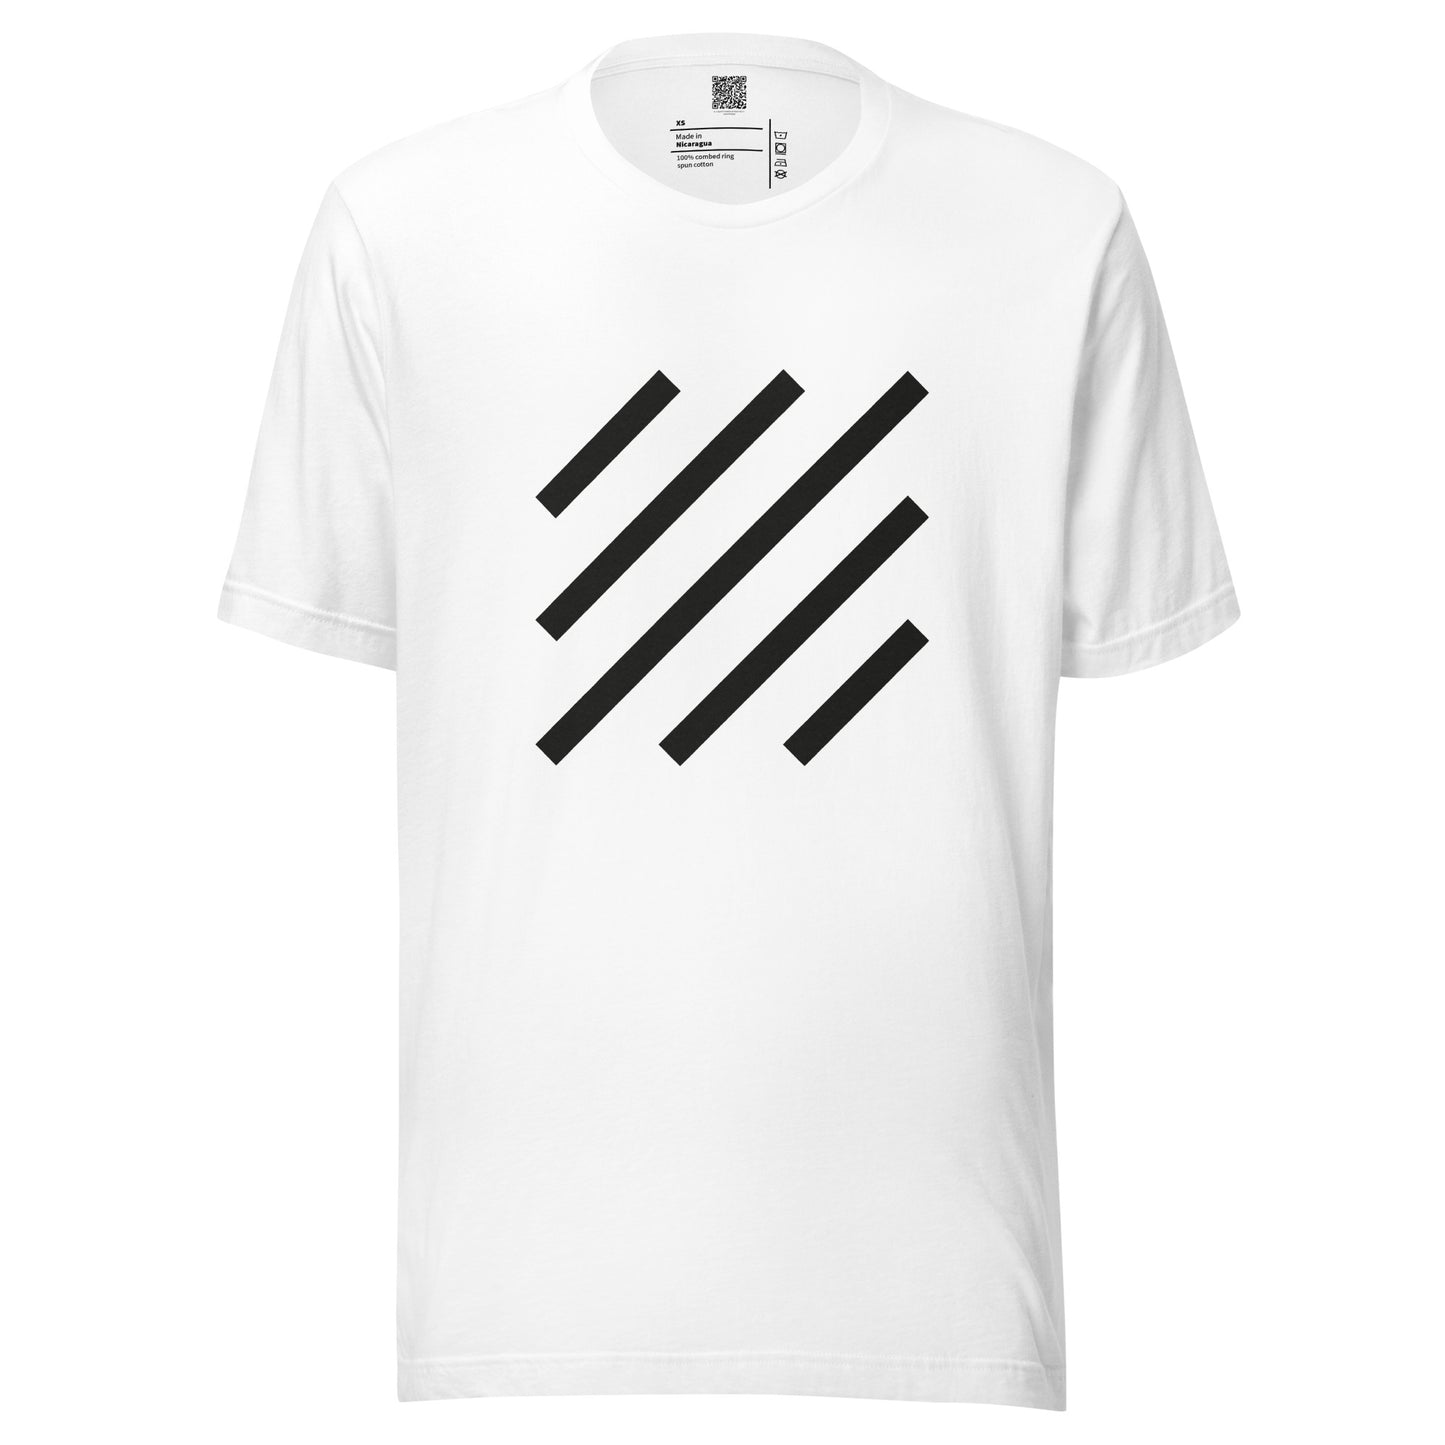 Unisex t-shirt - Decal Black